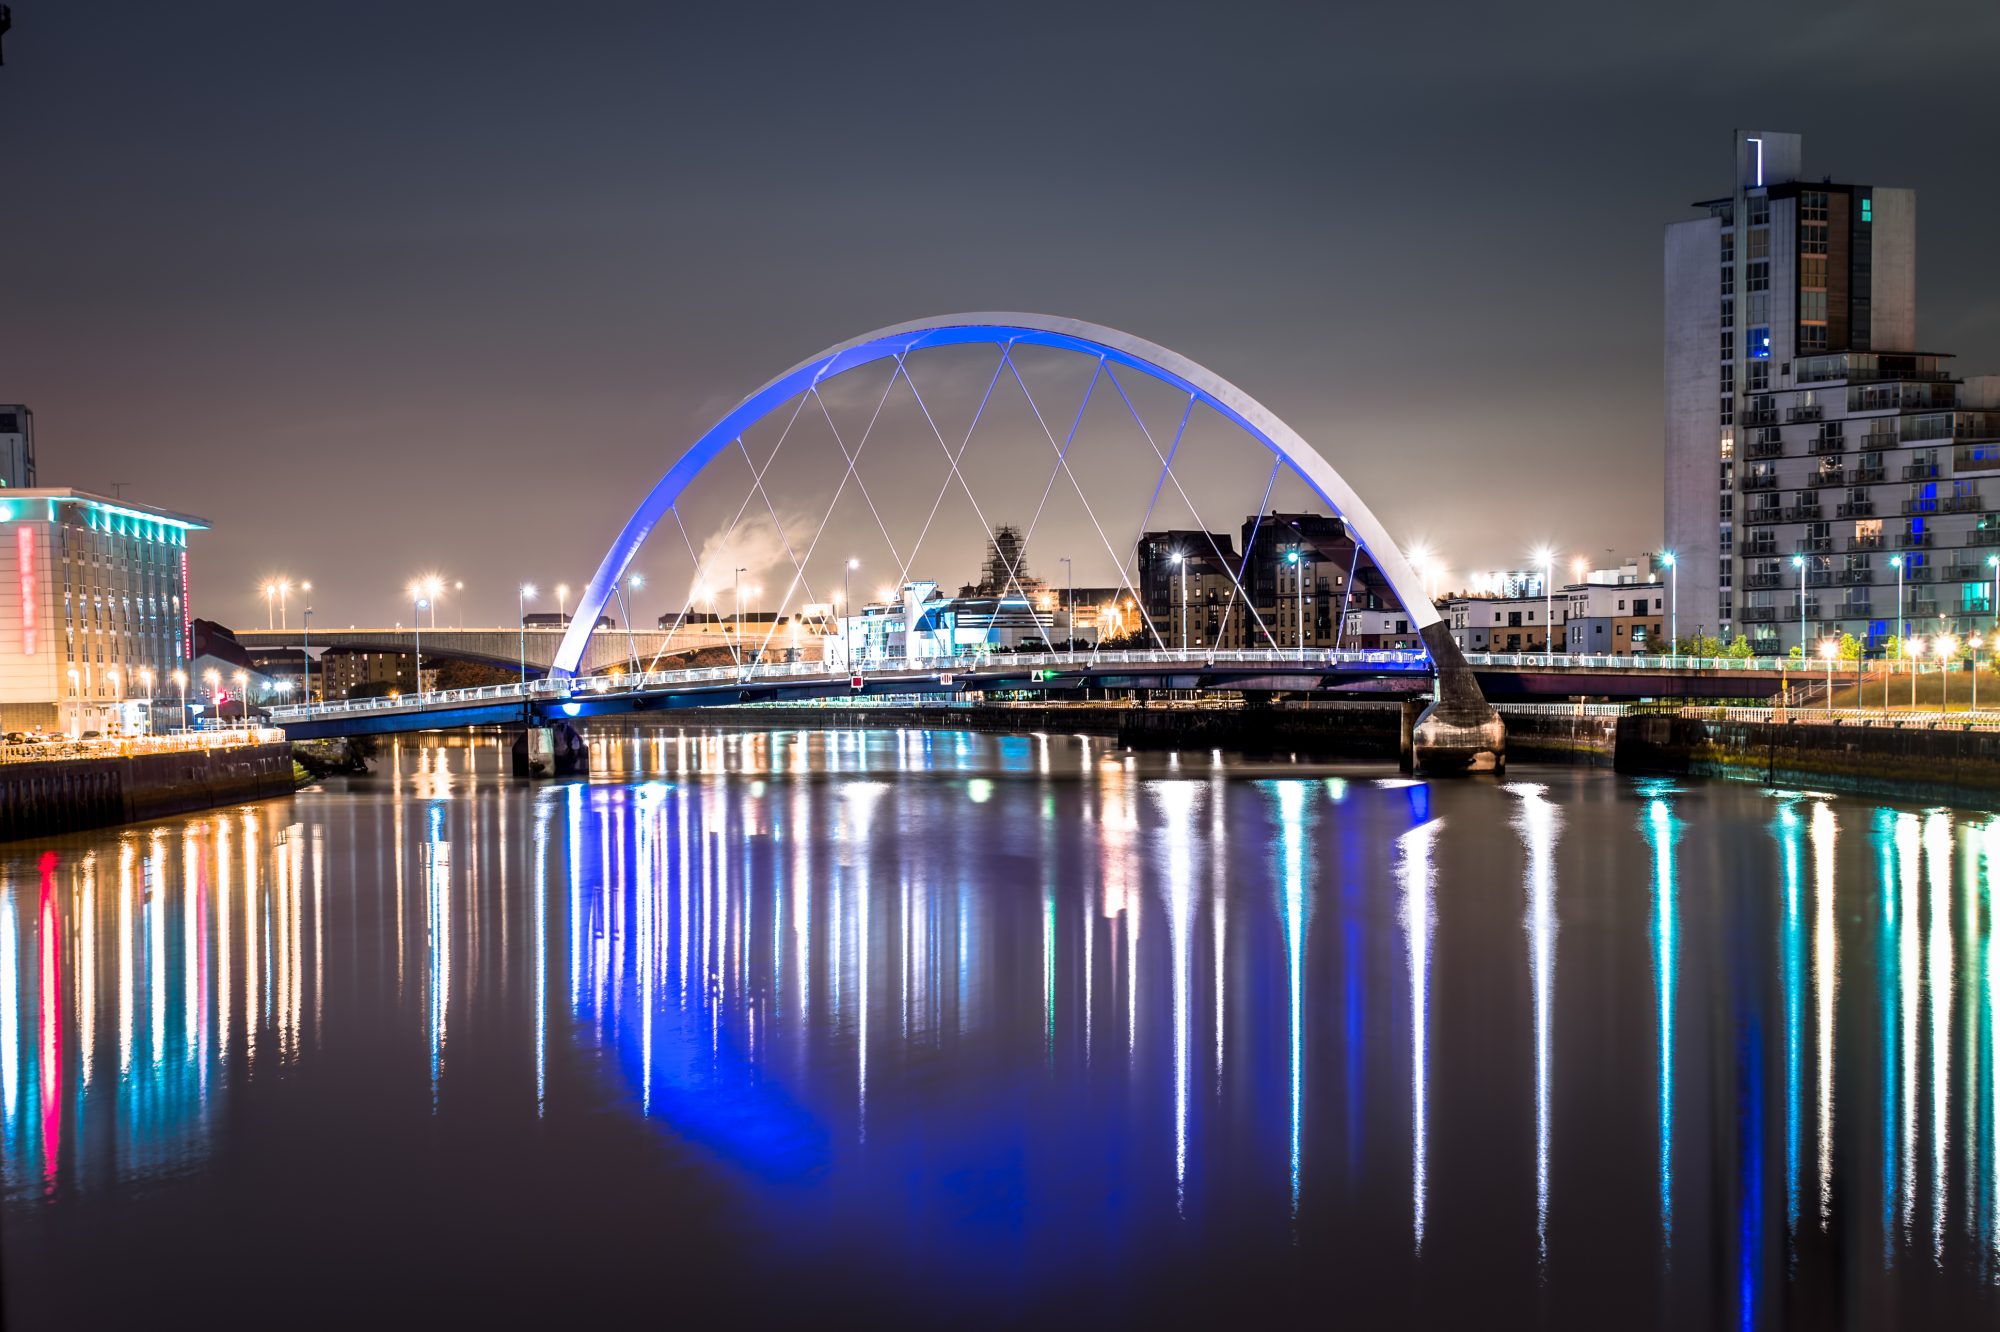 Nighttime shot of the Clyde Arc bridge in Glasgow, Scotland